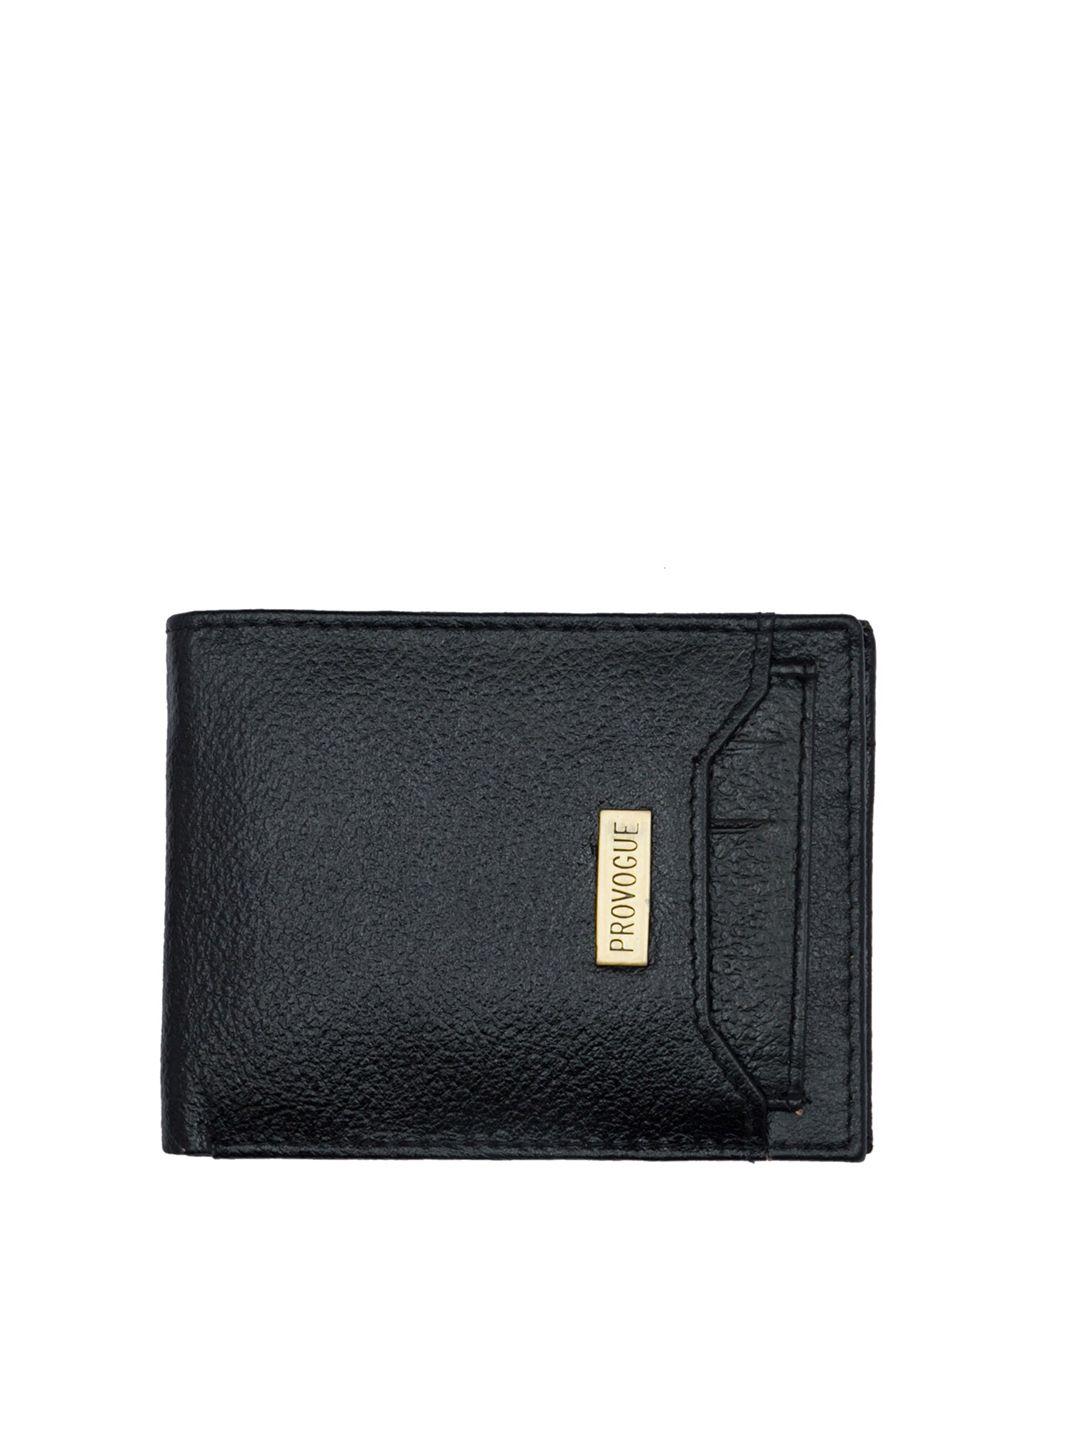 provogue men black genuine leather rfid two fold wallet